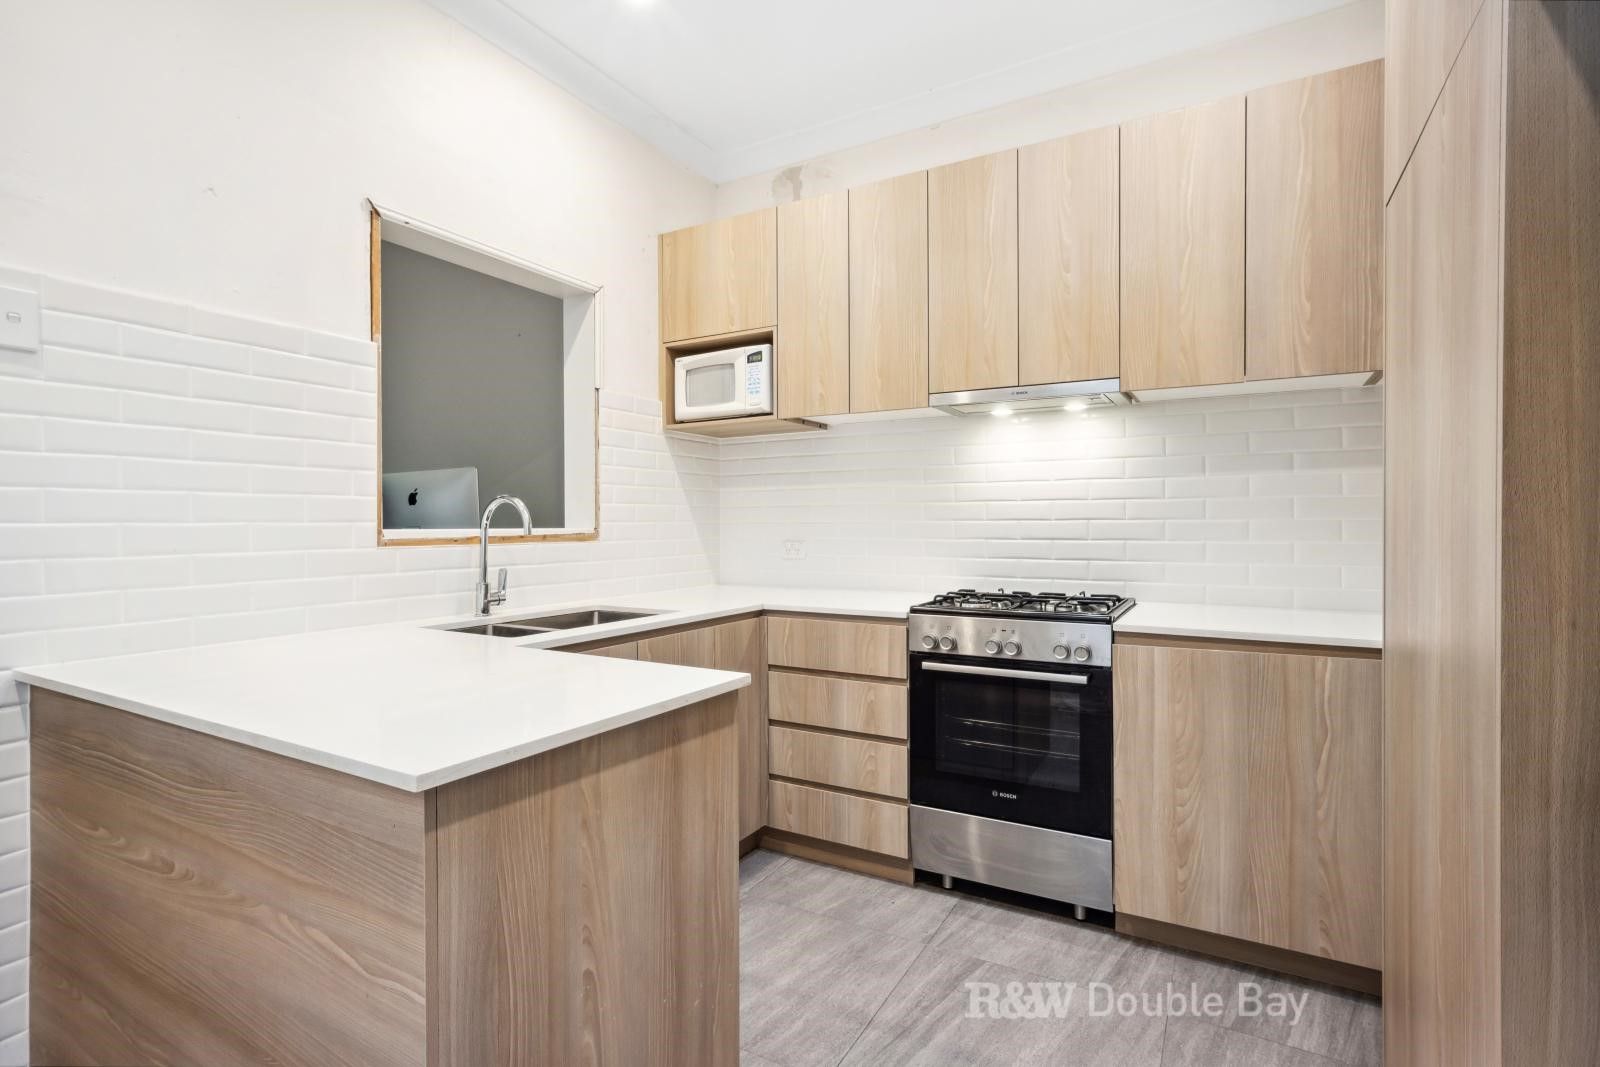 2 bedrooms House in 39 Hooper Street RANDWICK NSW, 2031